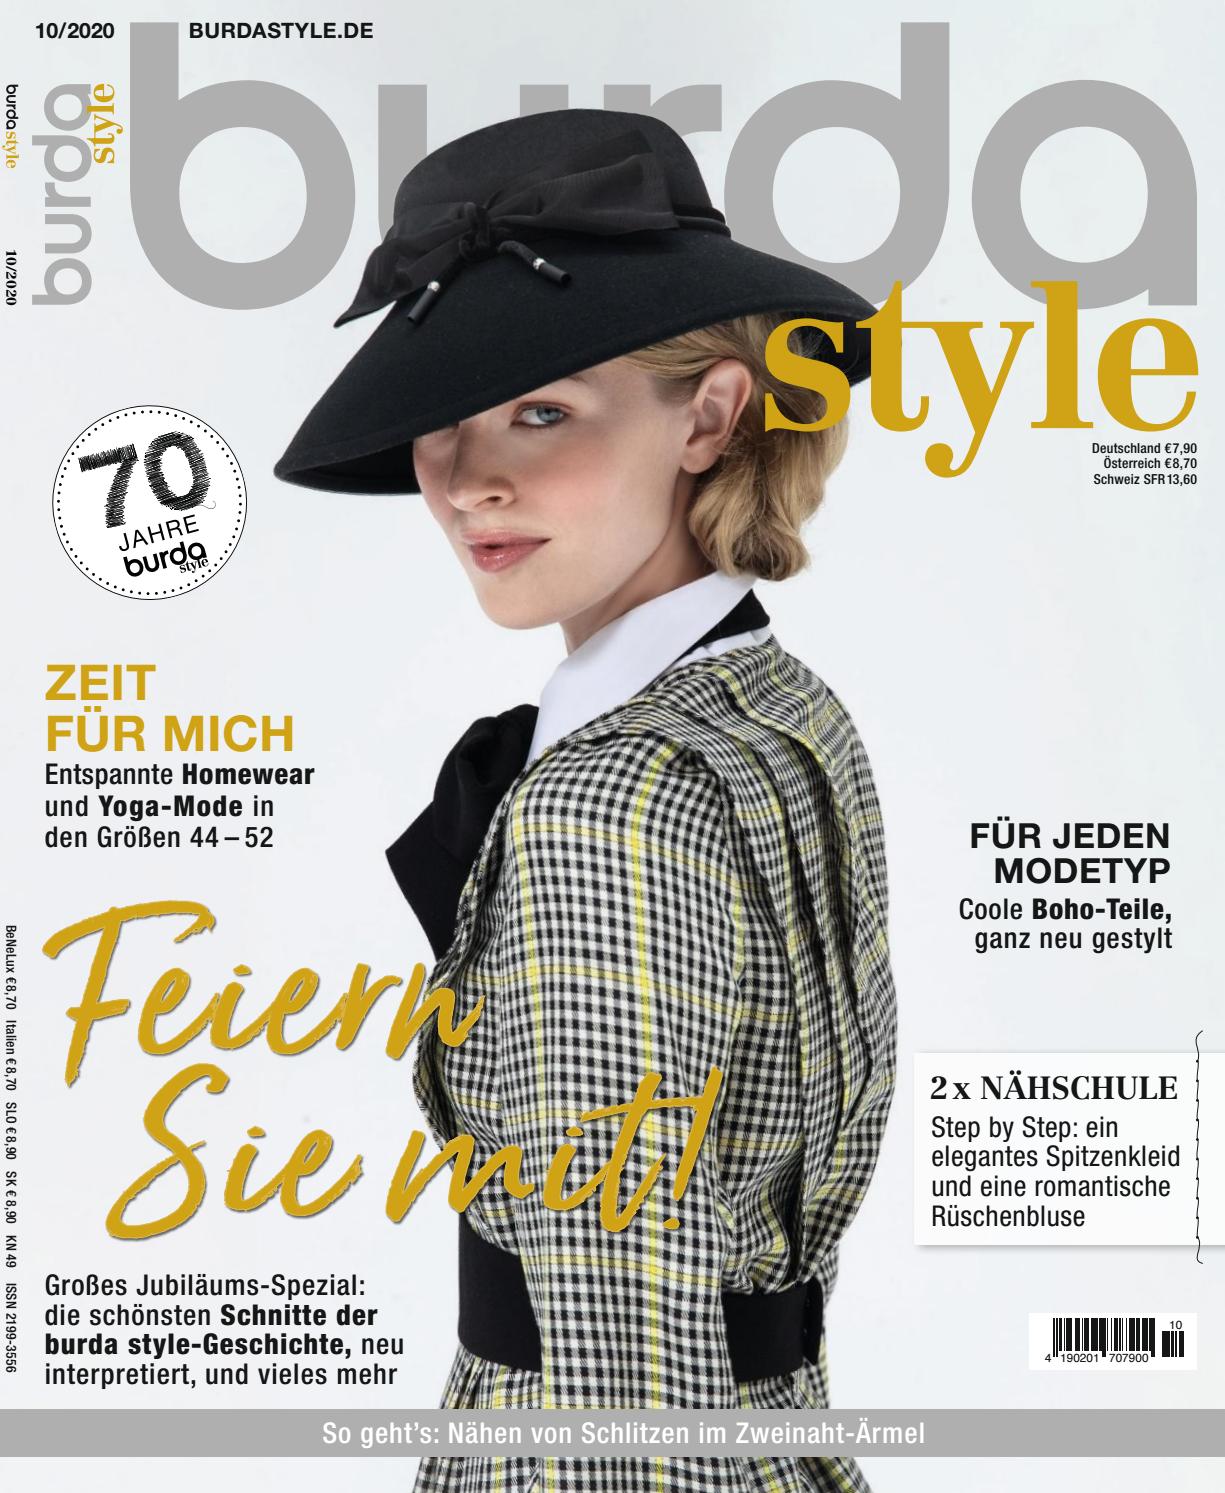 دانلود مجله بوردا Burda Style چاپ October 2020